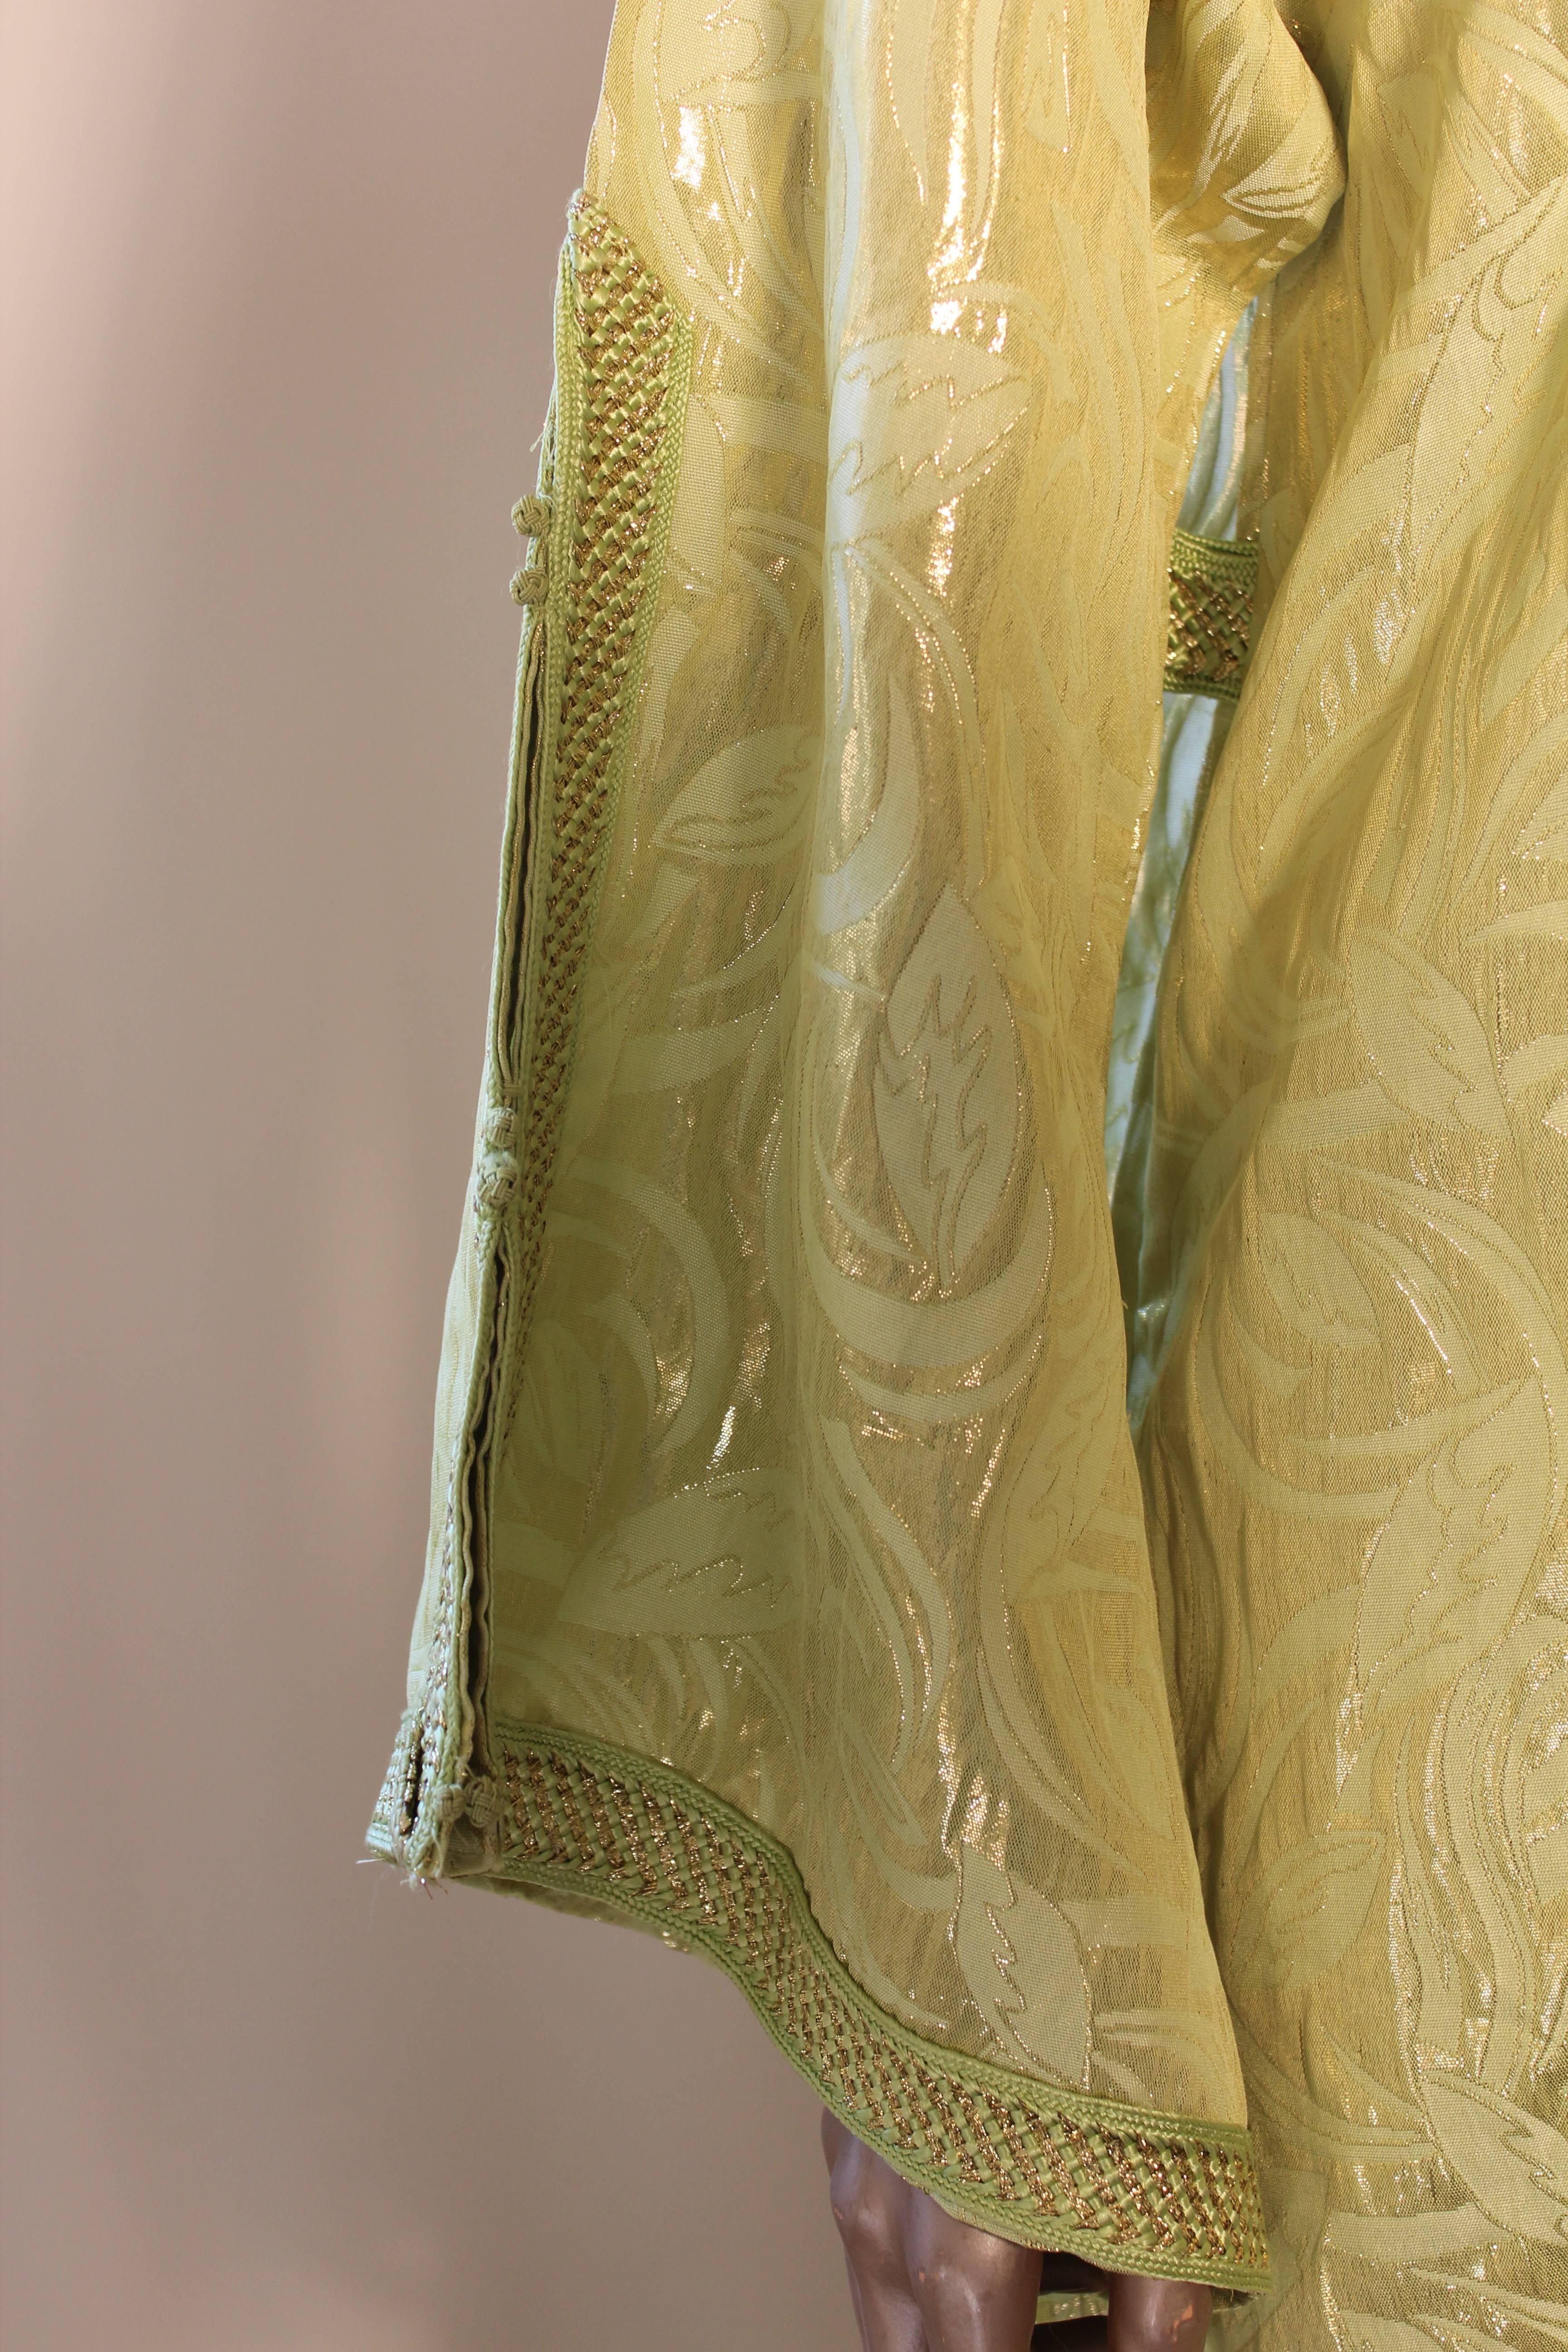 Moroccan Moorish Caftan Gown in Gold Brocade Maxi Dress Kaftan Size M to L For Sale 1